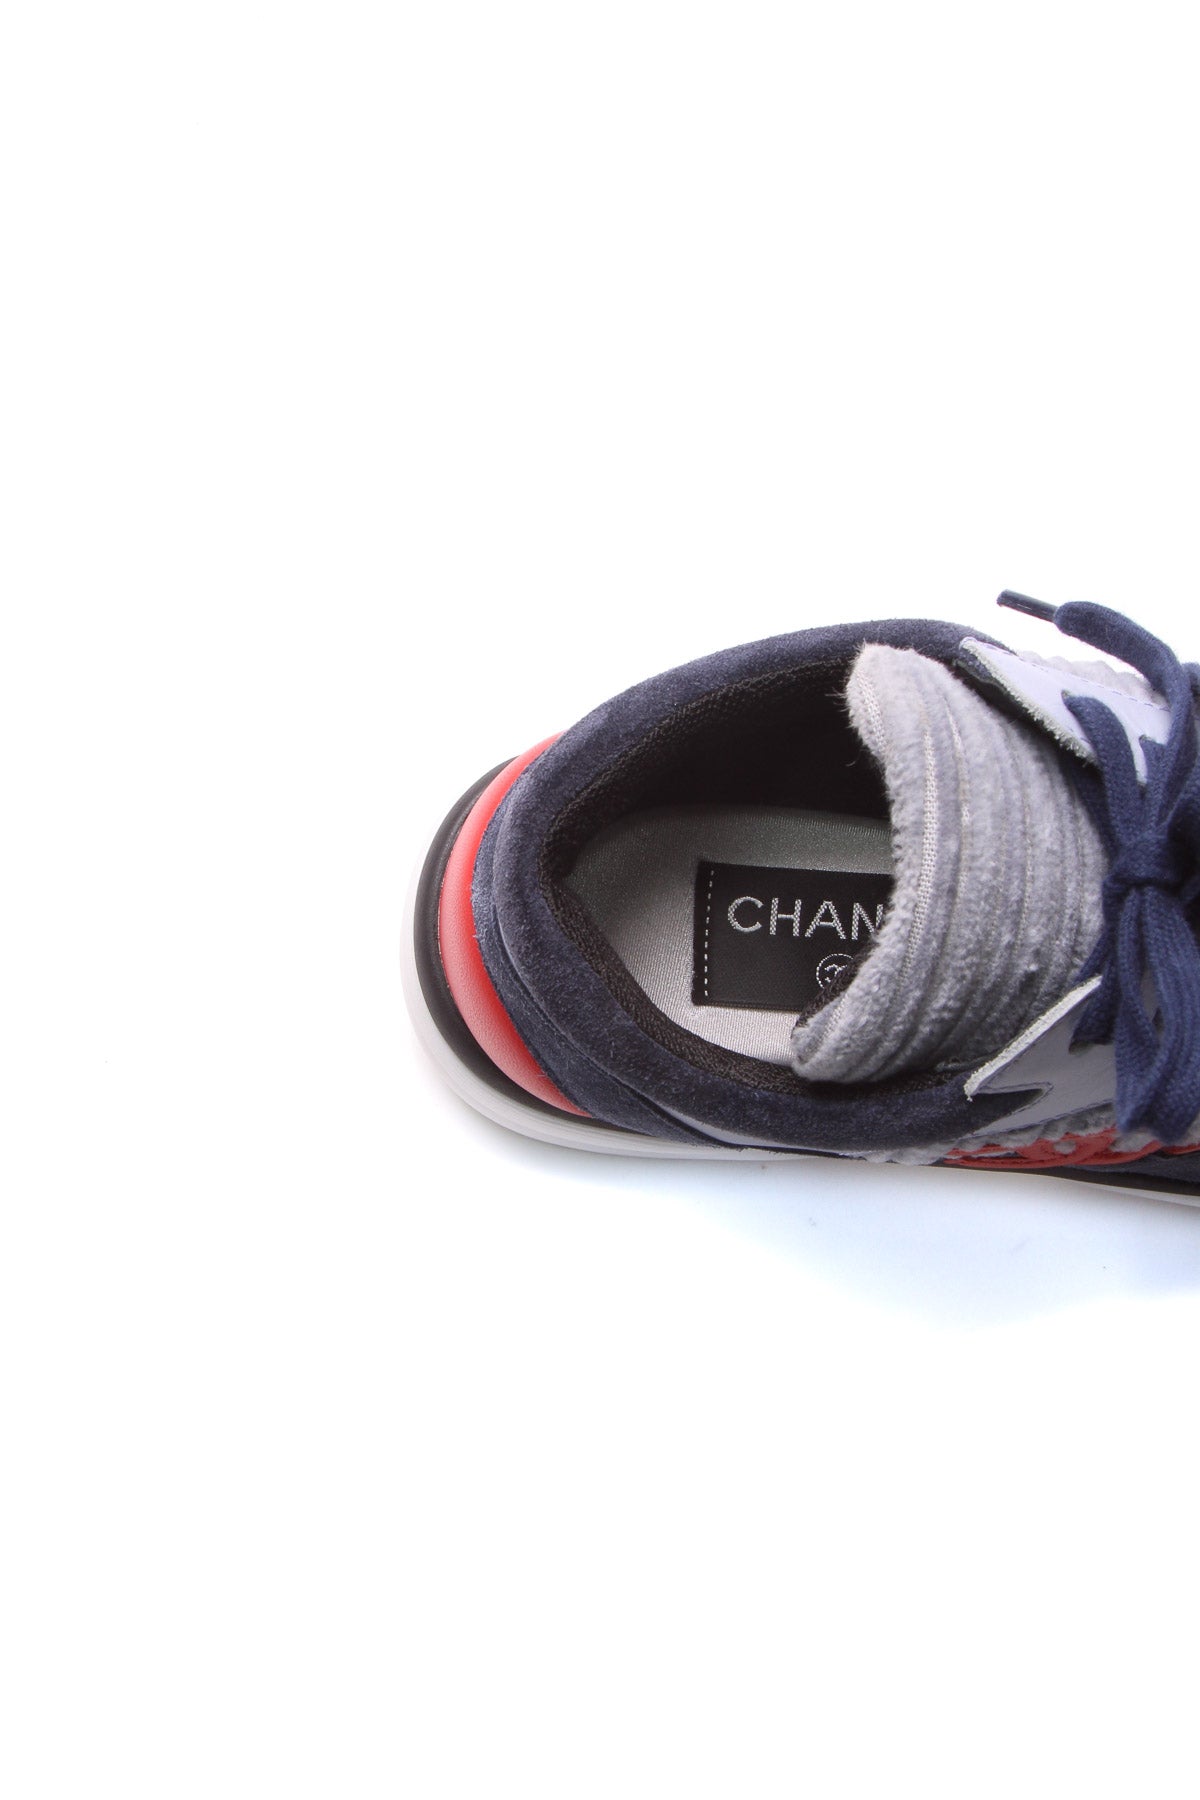 Chanel Fabric, Suede Calfskin & Calfskin Dark Green / Dark Blue / Navy Blue Low  Top Sneakers - Sneak in Peace